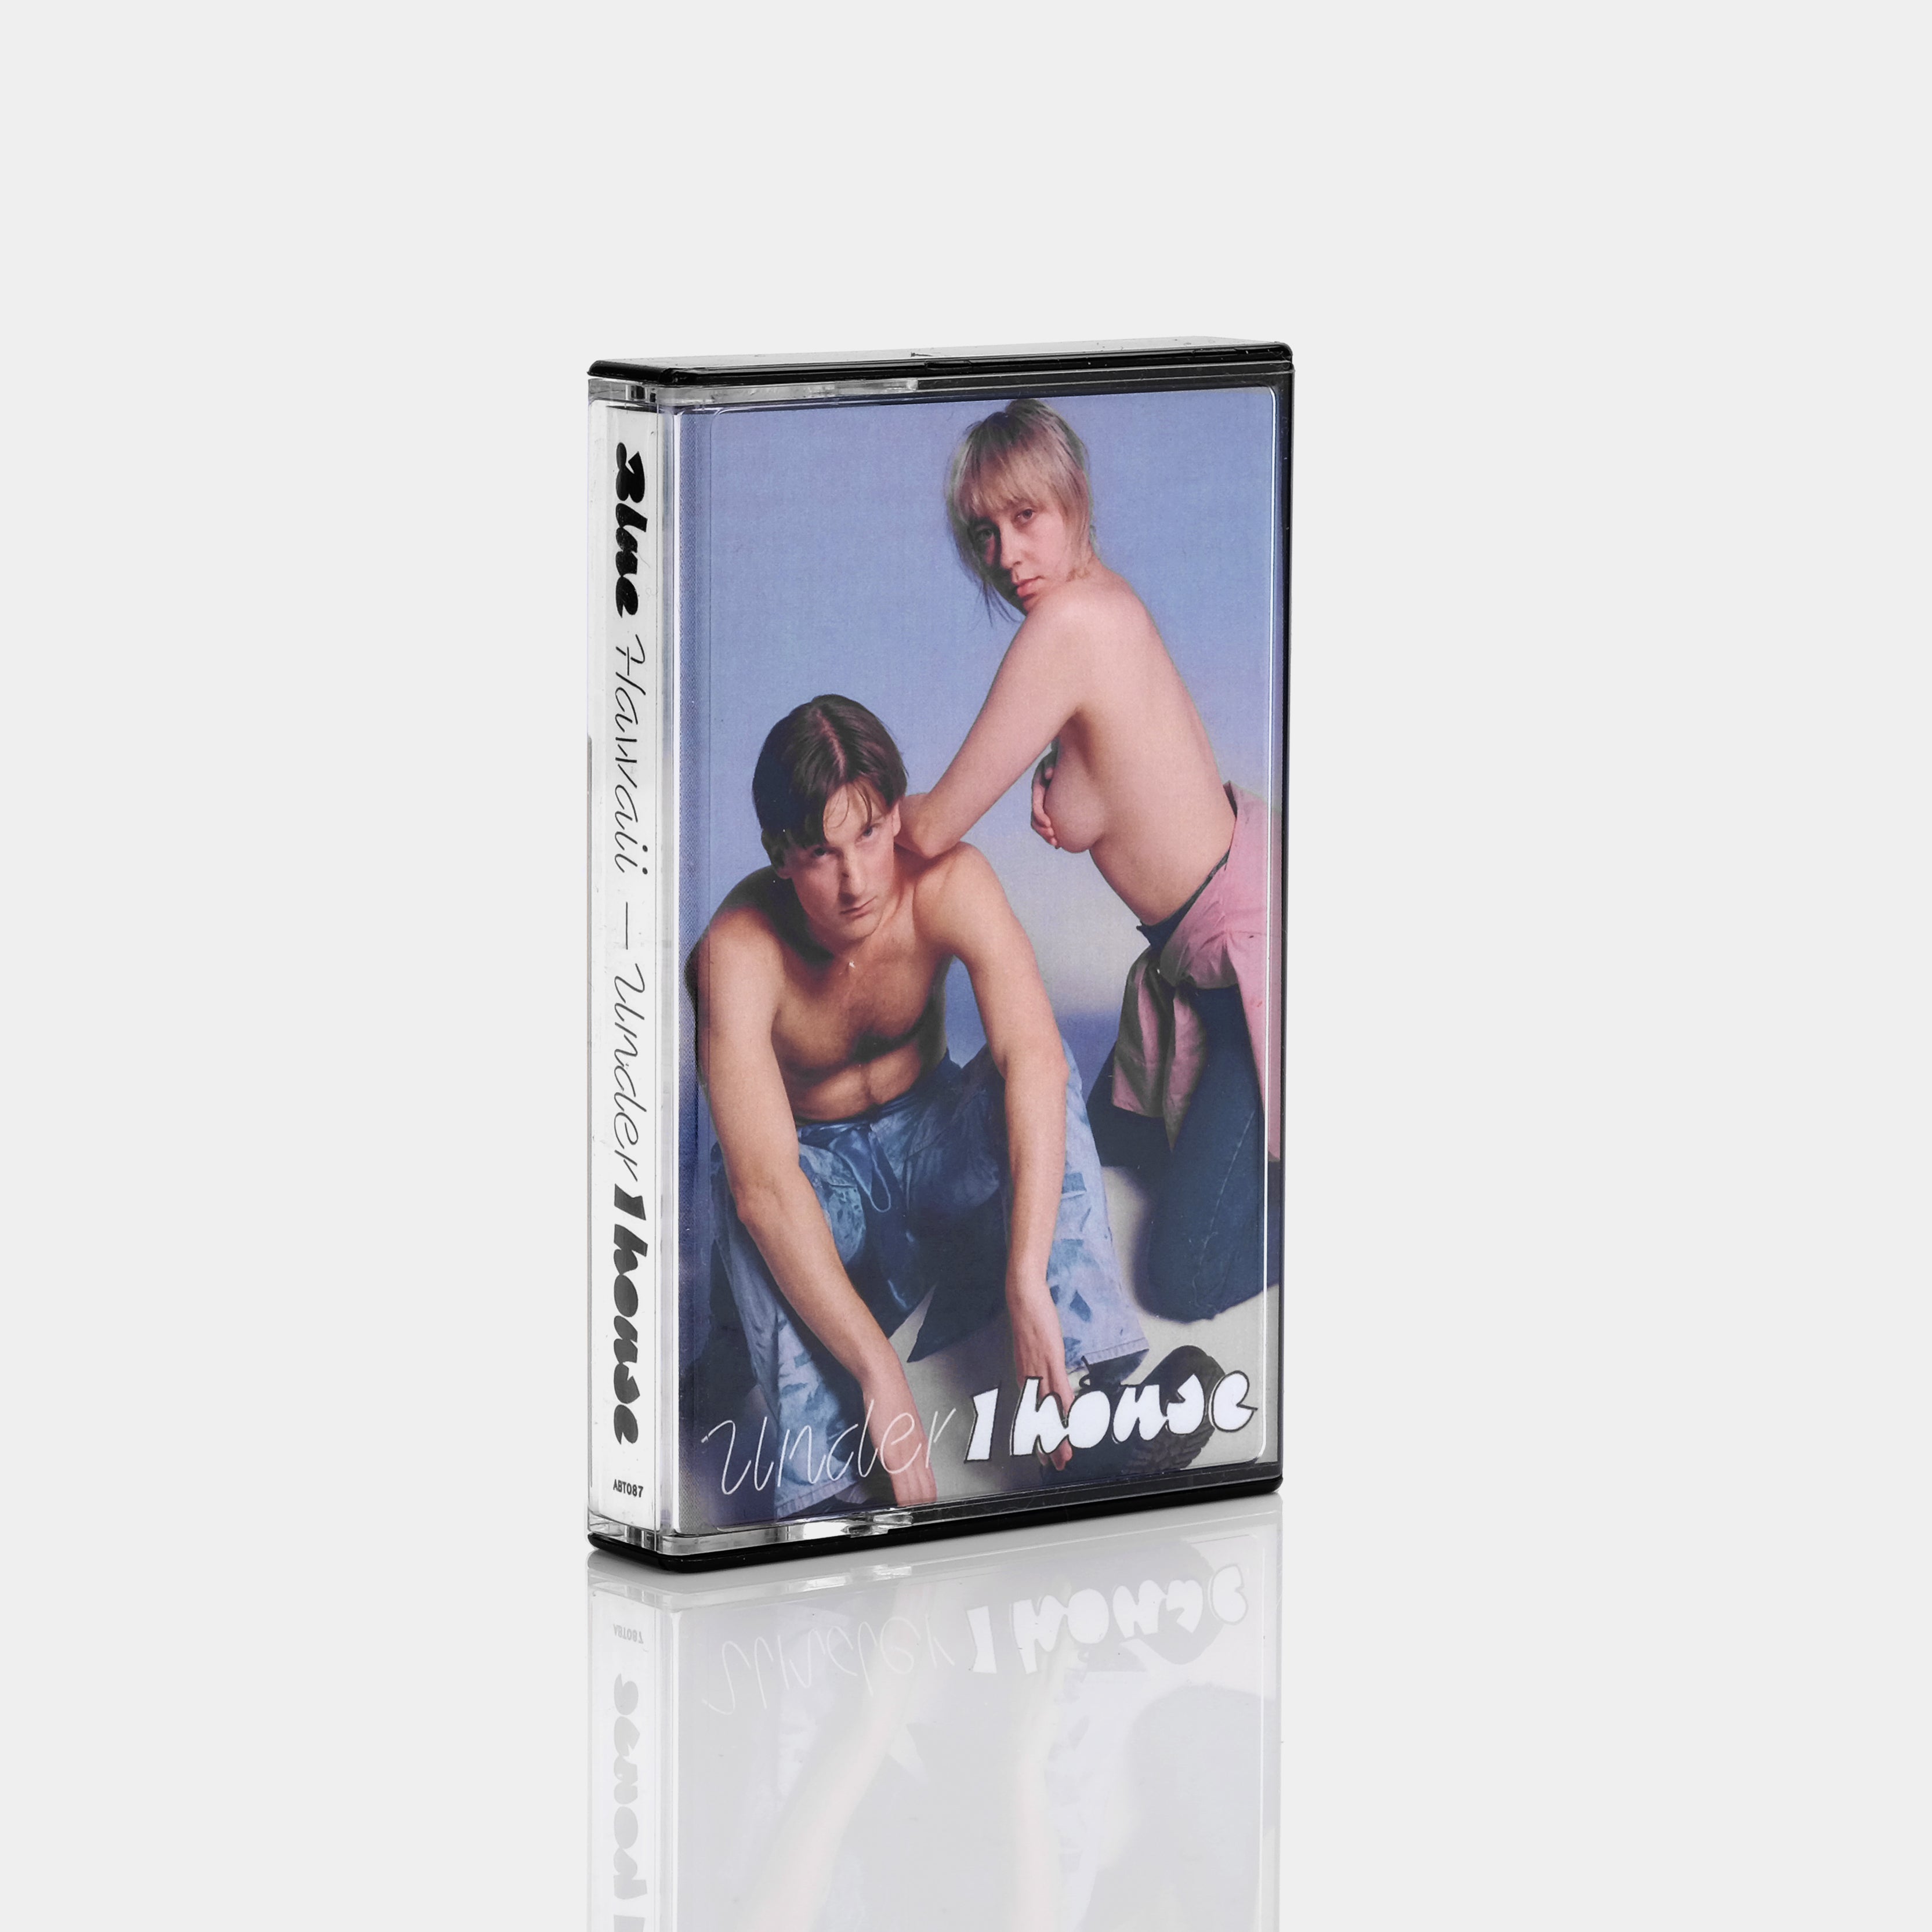 Blue Hawaii - Under 1 House Cassette Tape